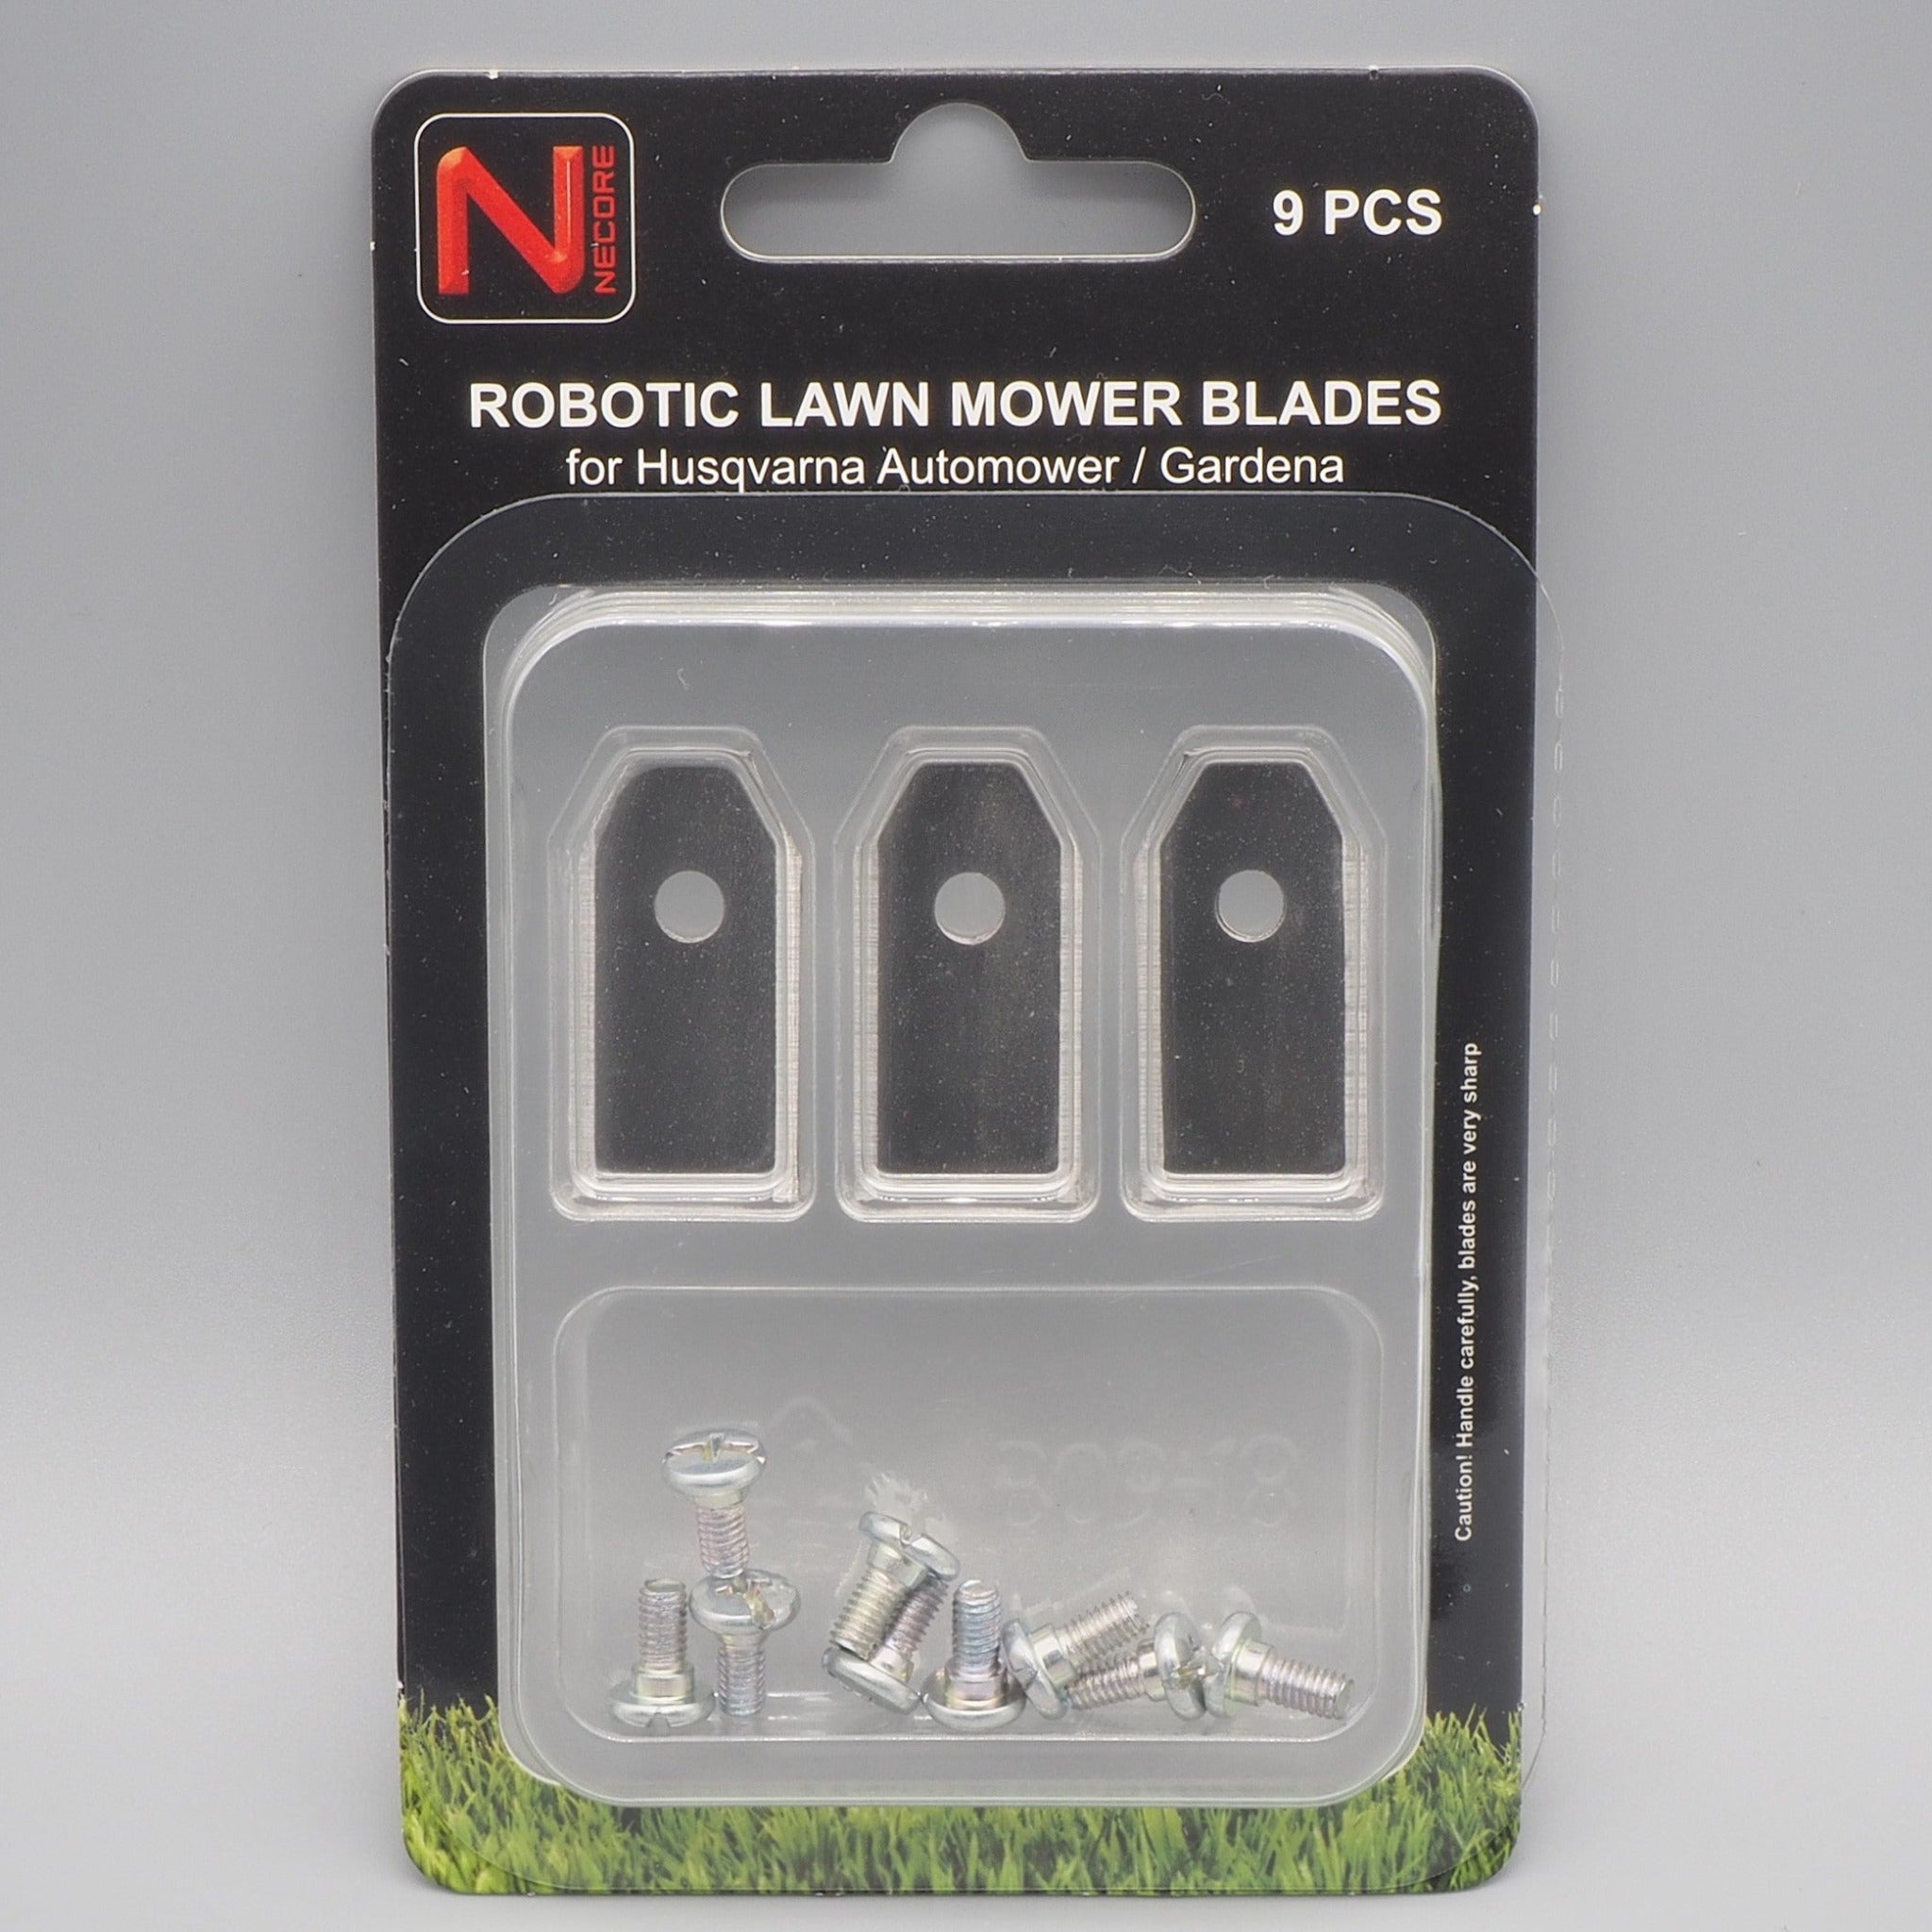 Blades for Robotic Lawnmowers Husqvarna and Gardena